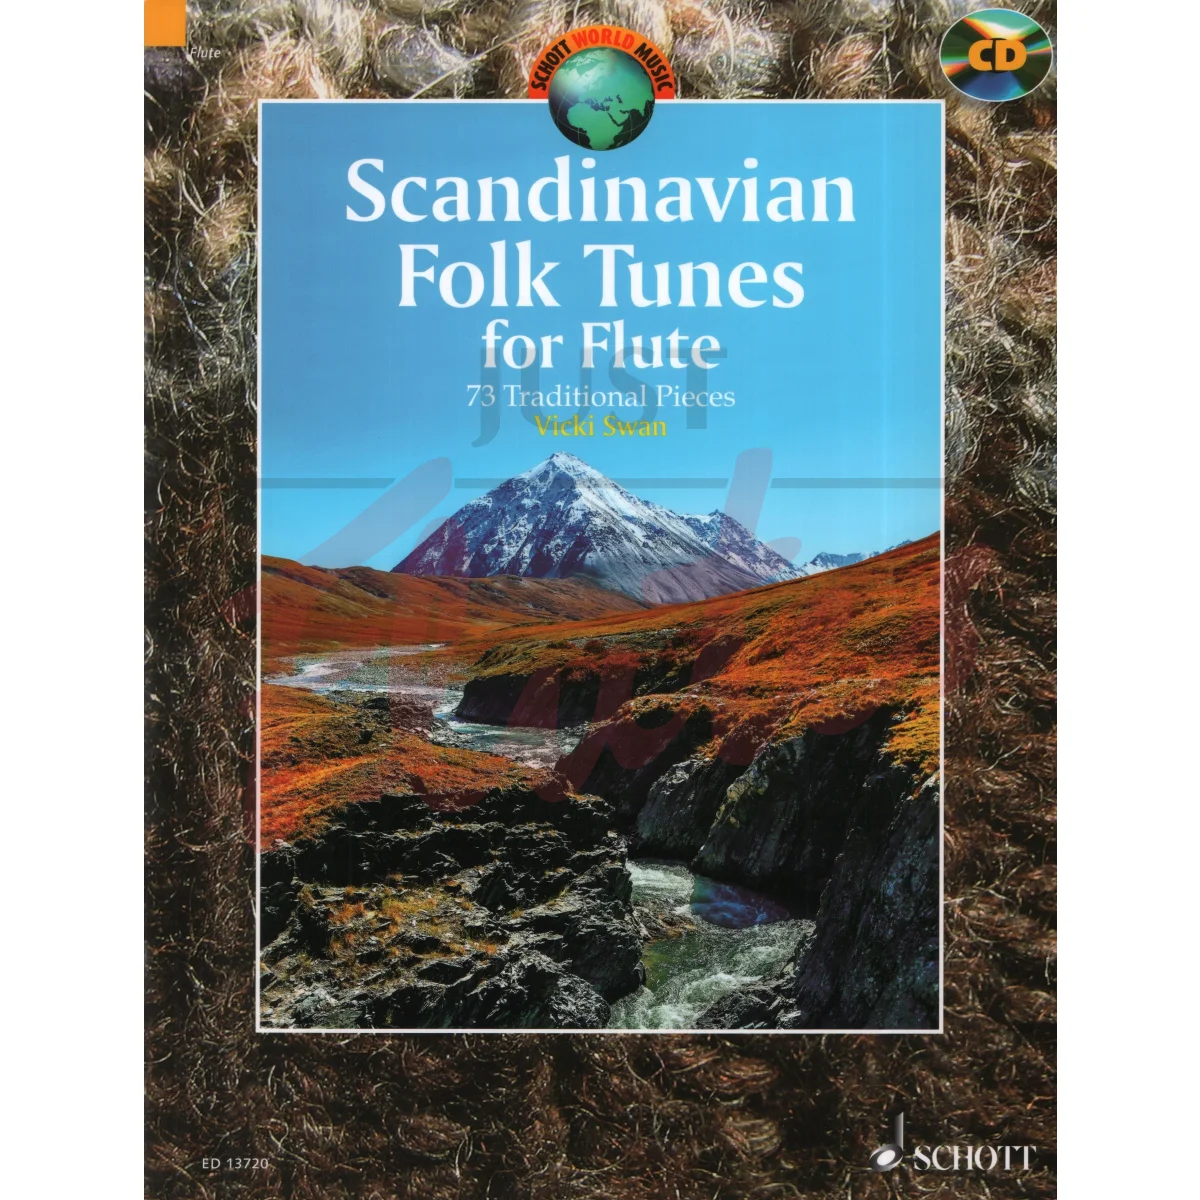 Scandinavian Folk Tunes for Flute